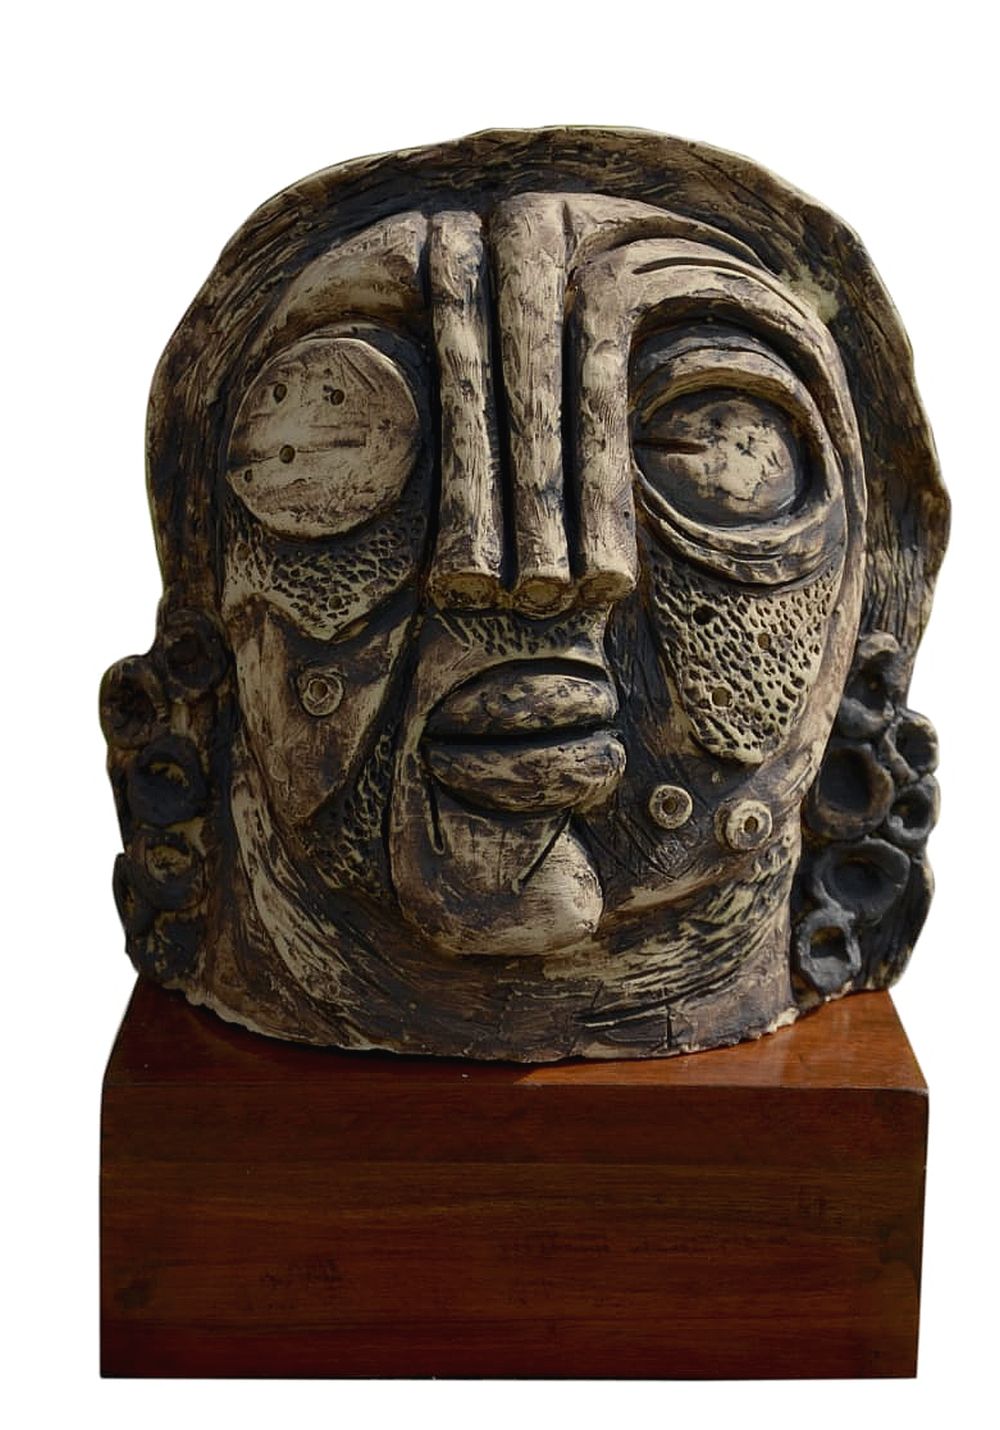 My Frida : ceramic Frida Kalhlo inspired head by Atish Mukherjee